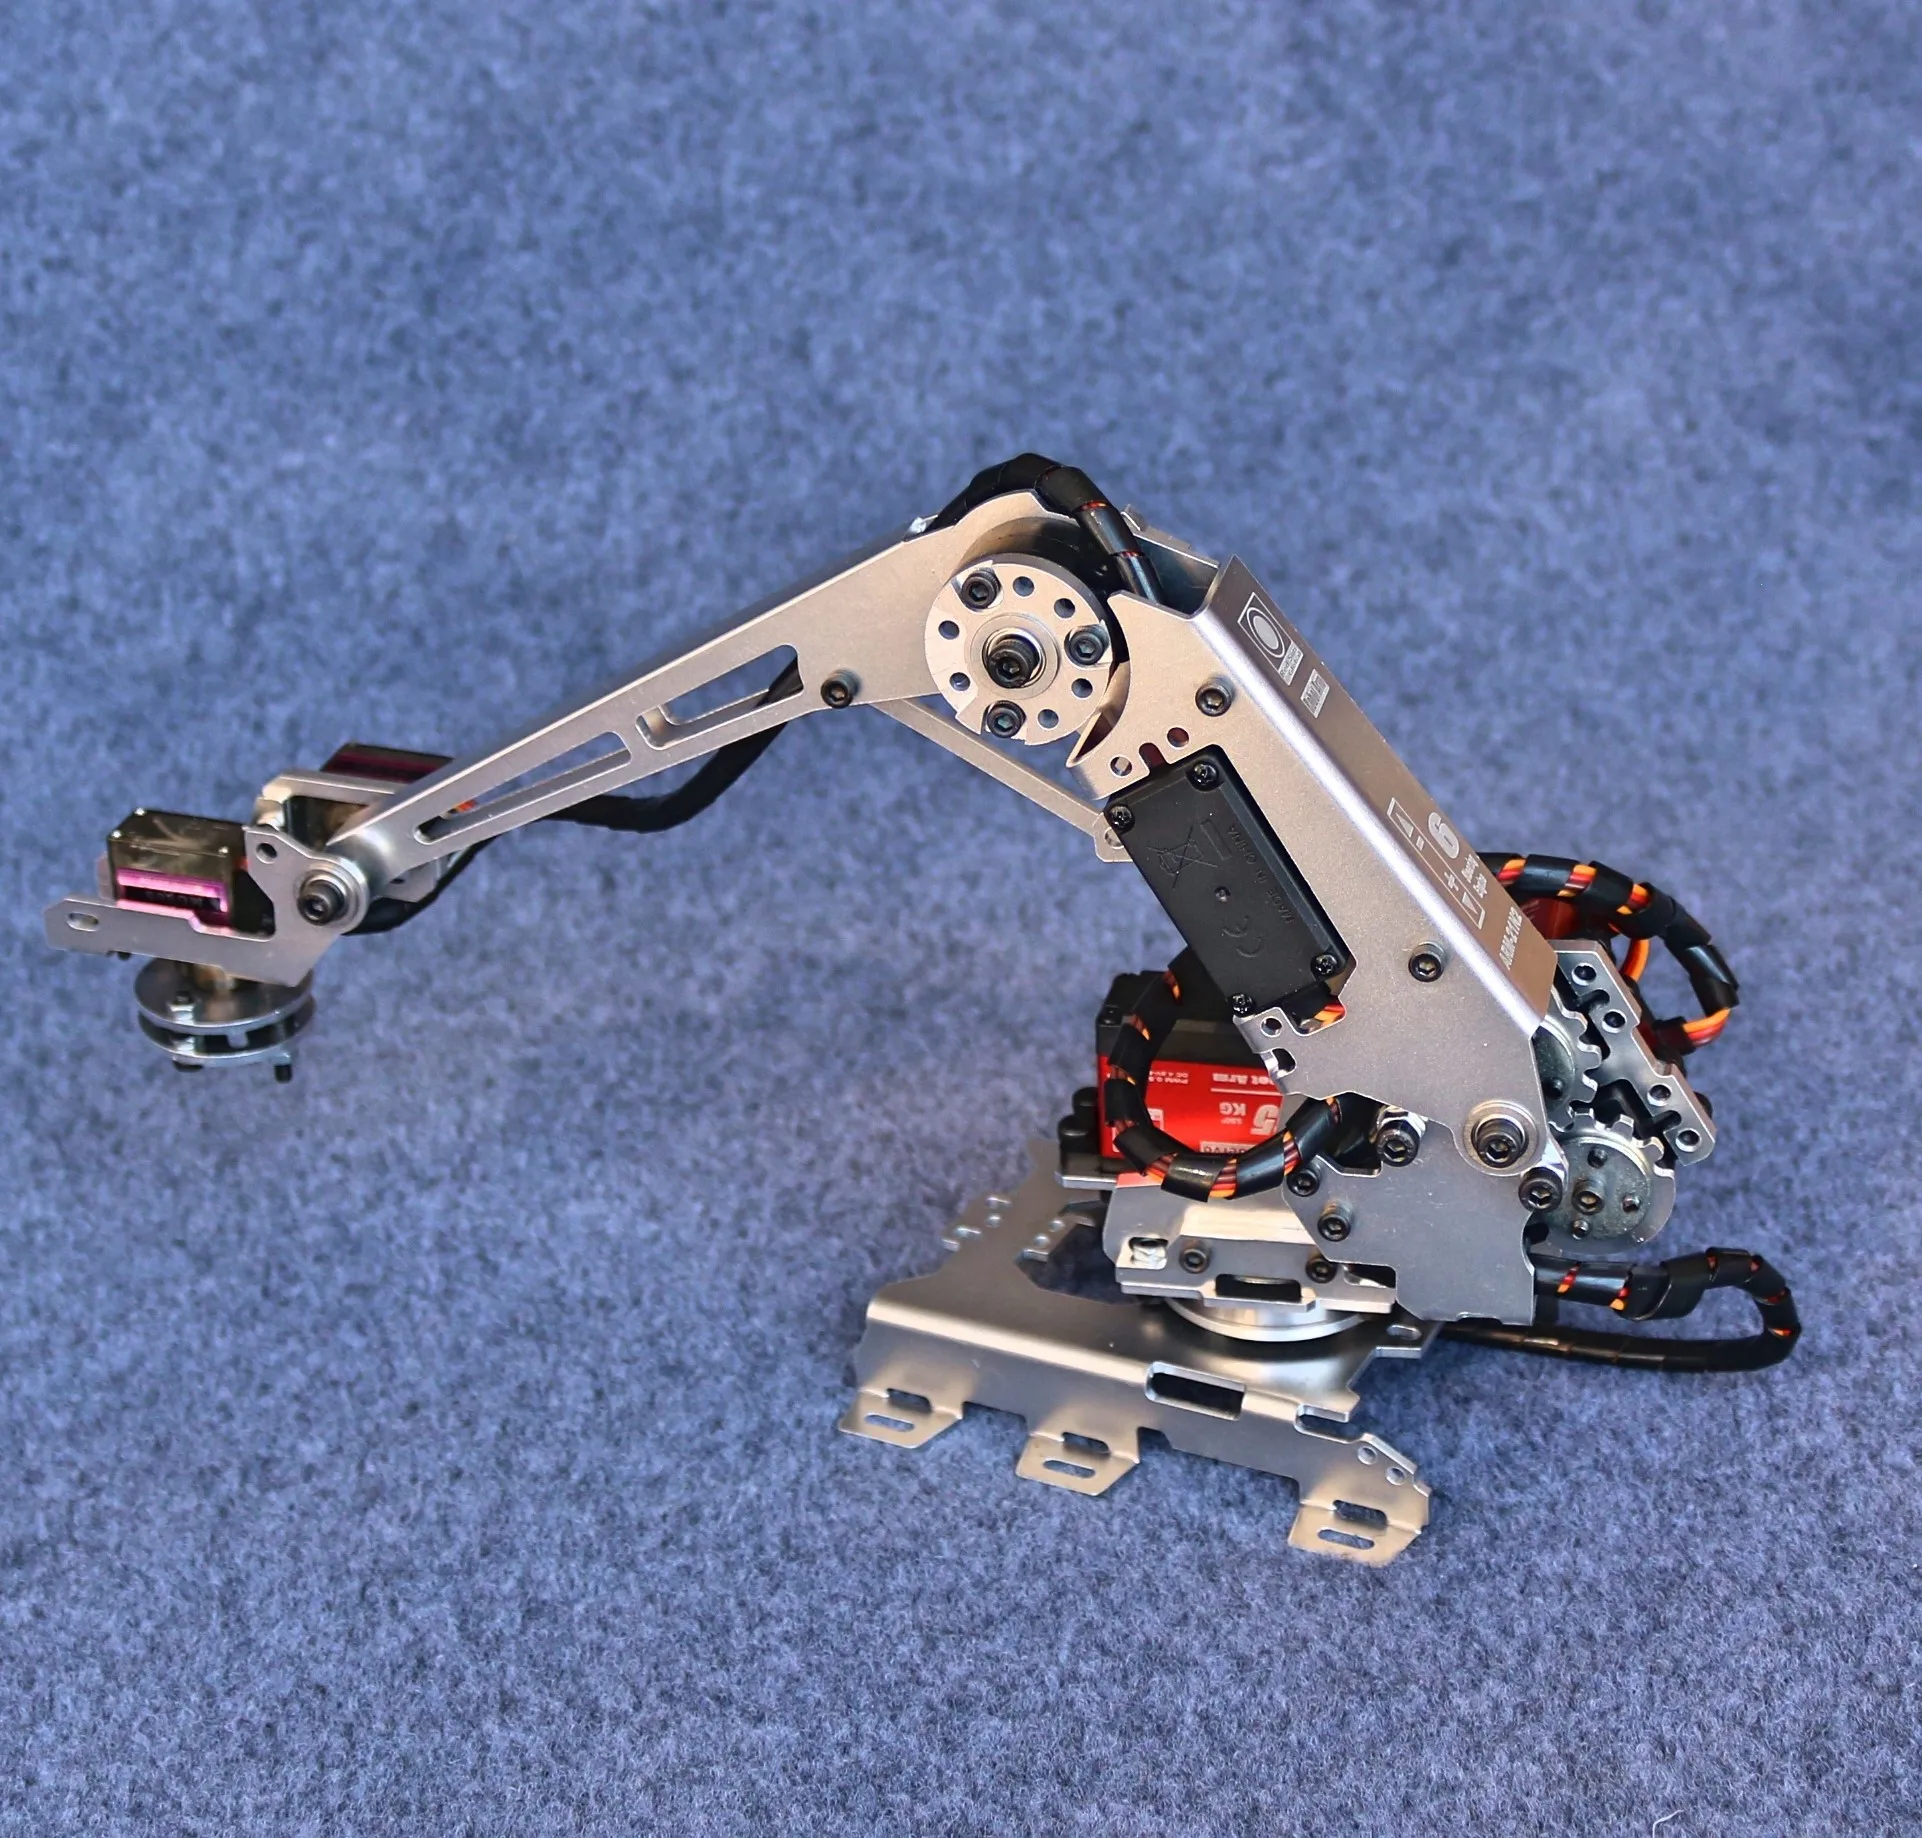 New 6dof Robotic Arm Suction Cup Multi DOF Manipulator Industrial Robot Arm Model with 6pcs Servos for Arduino DIY STEM Toy